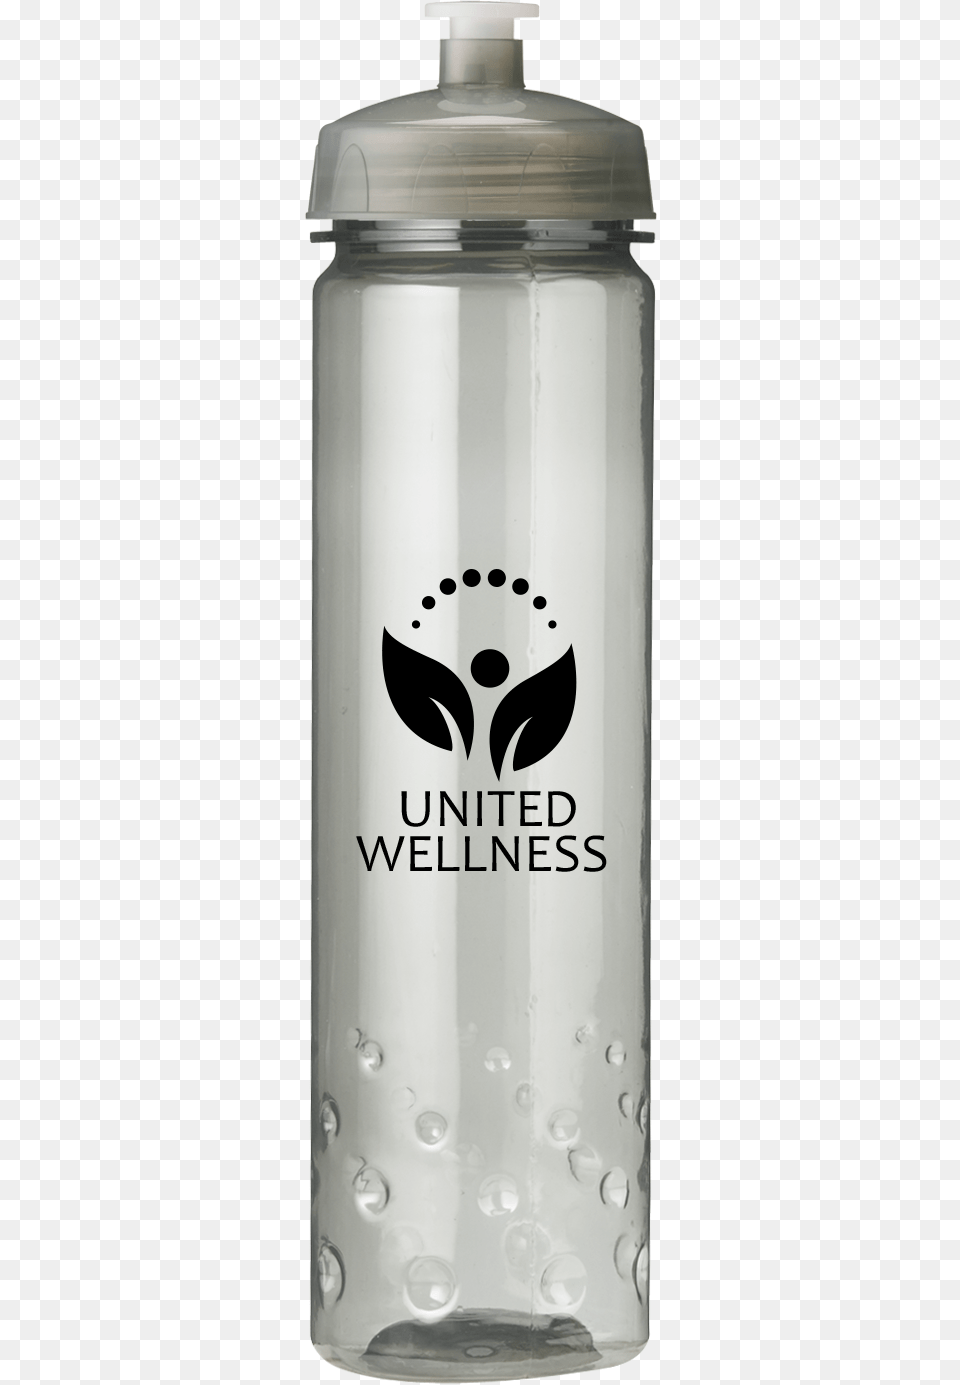 Base Price 1 Promotional Plastic Water Bottles Printed With Logo, Jar, Bottle, Shaker, Pottery Png Image